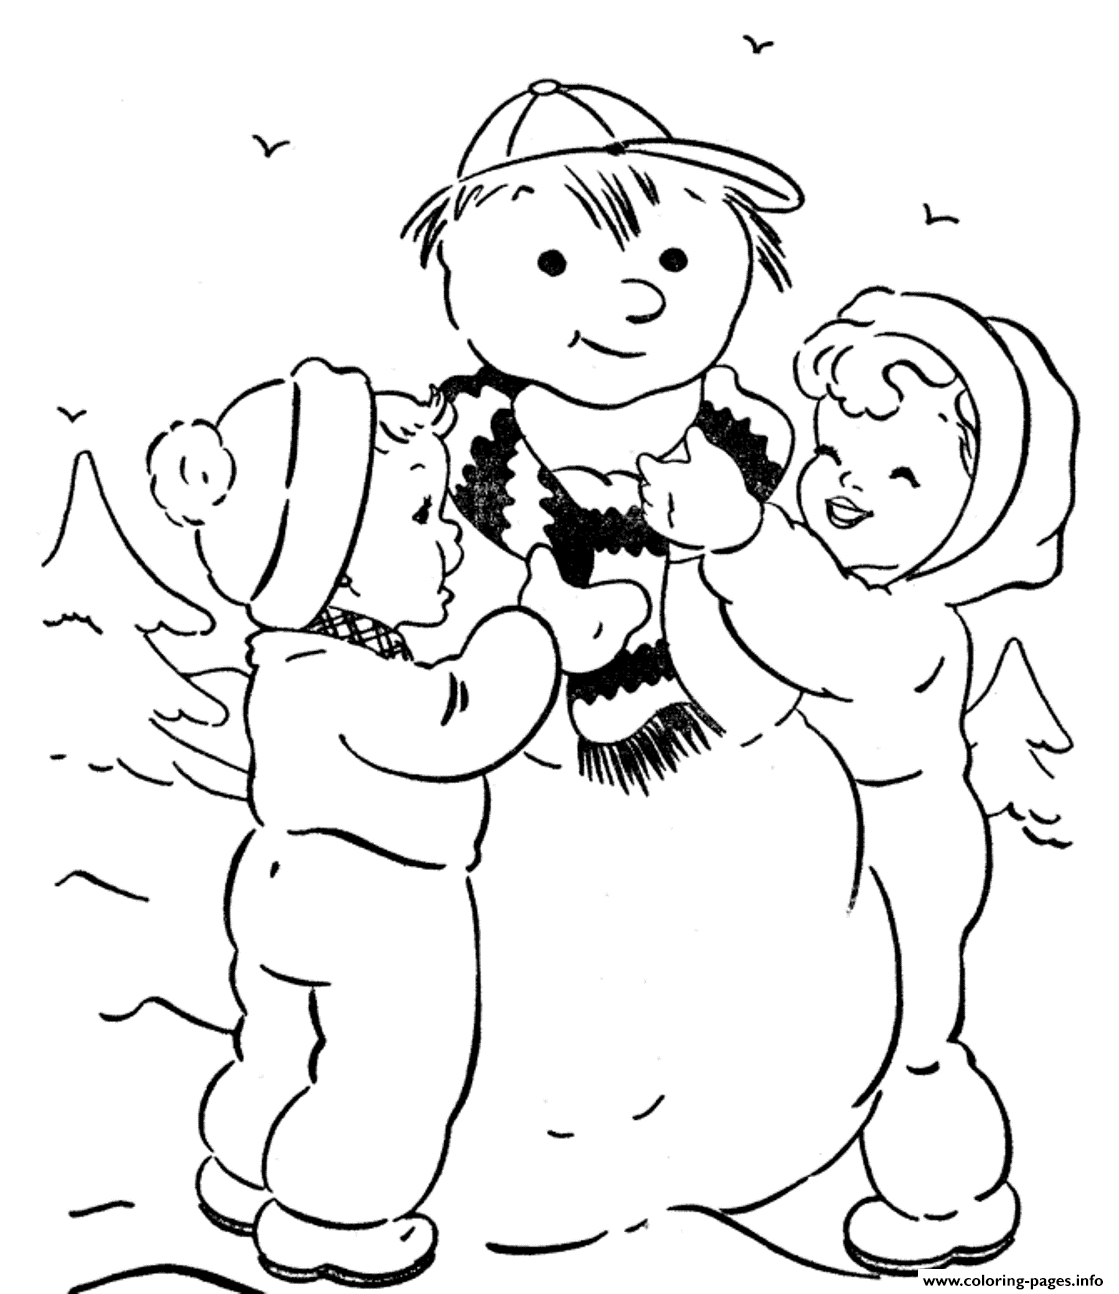 Kids Making A Snowman S To Print42b7 coloring